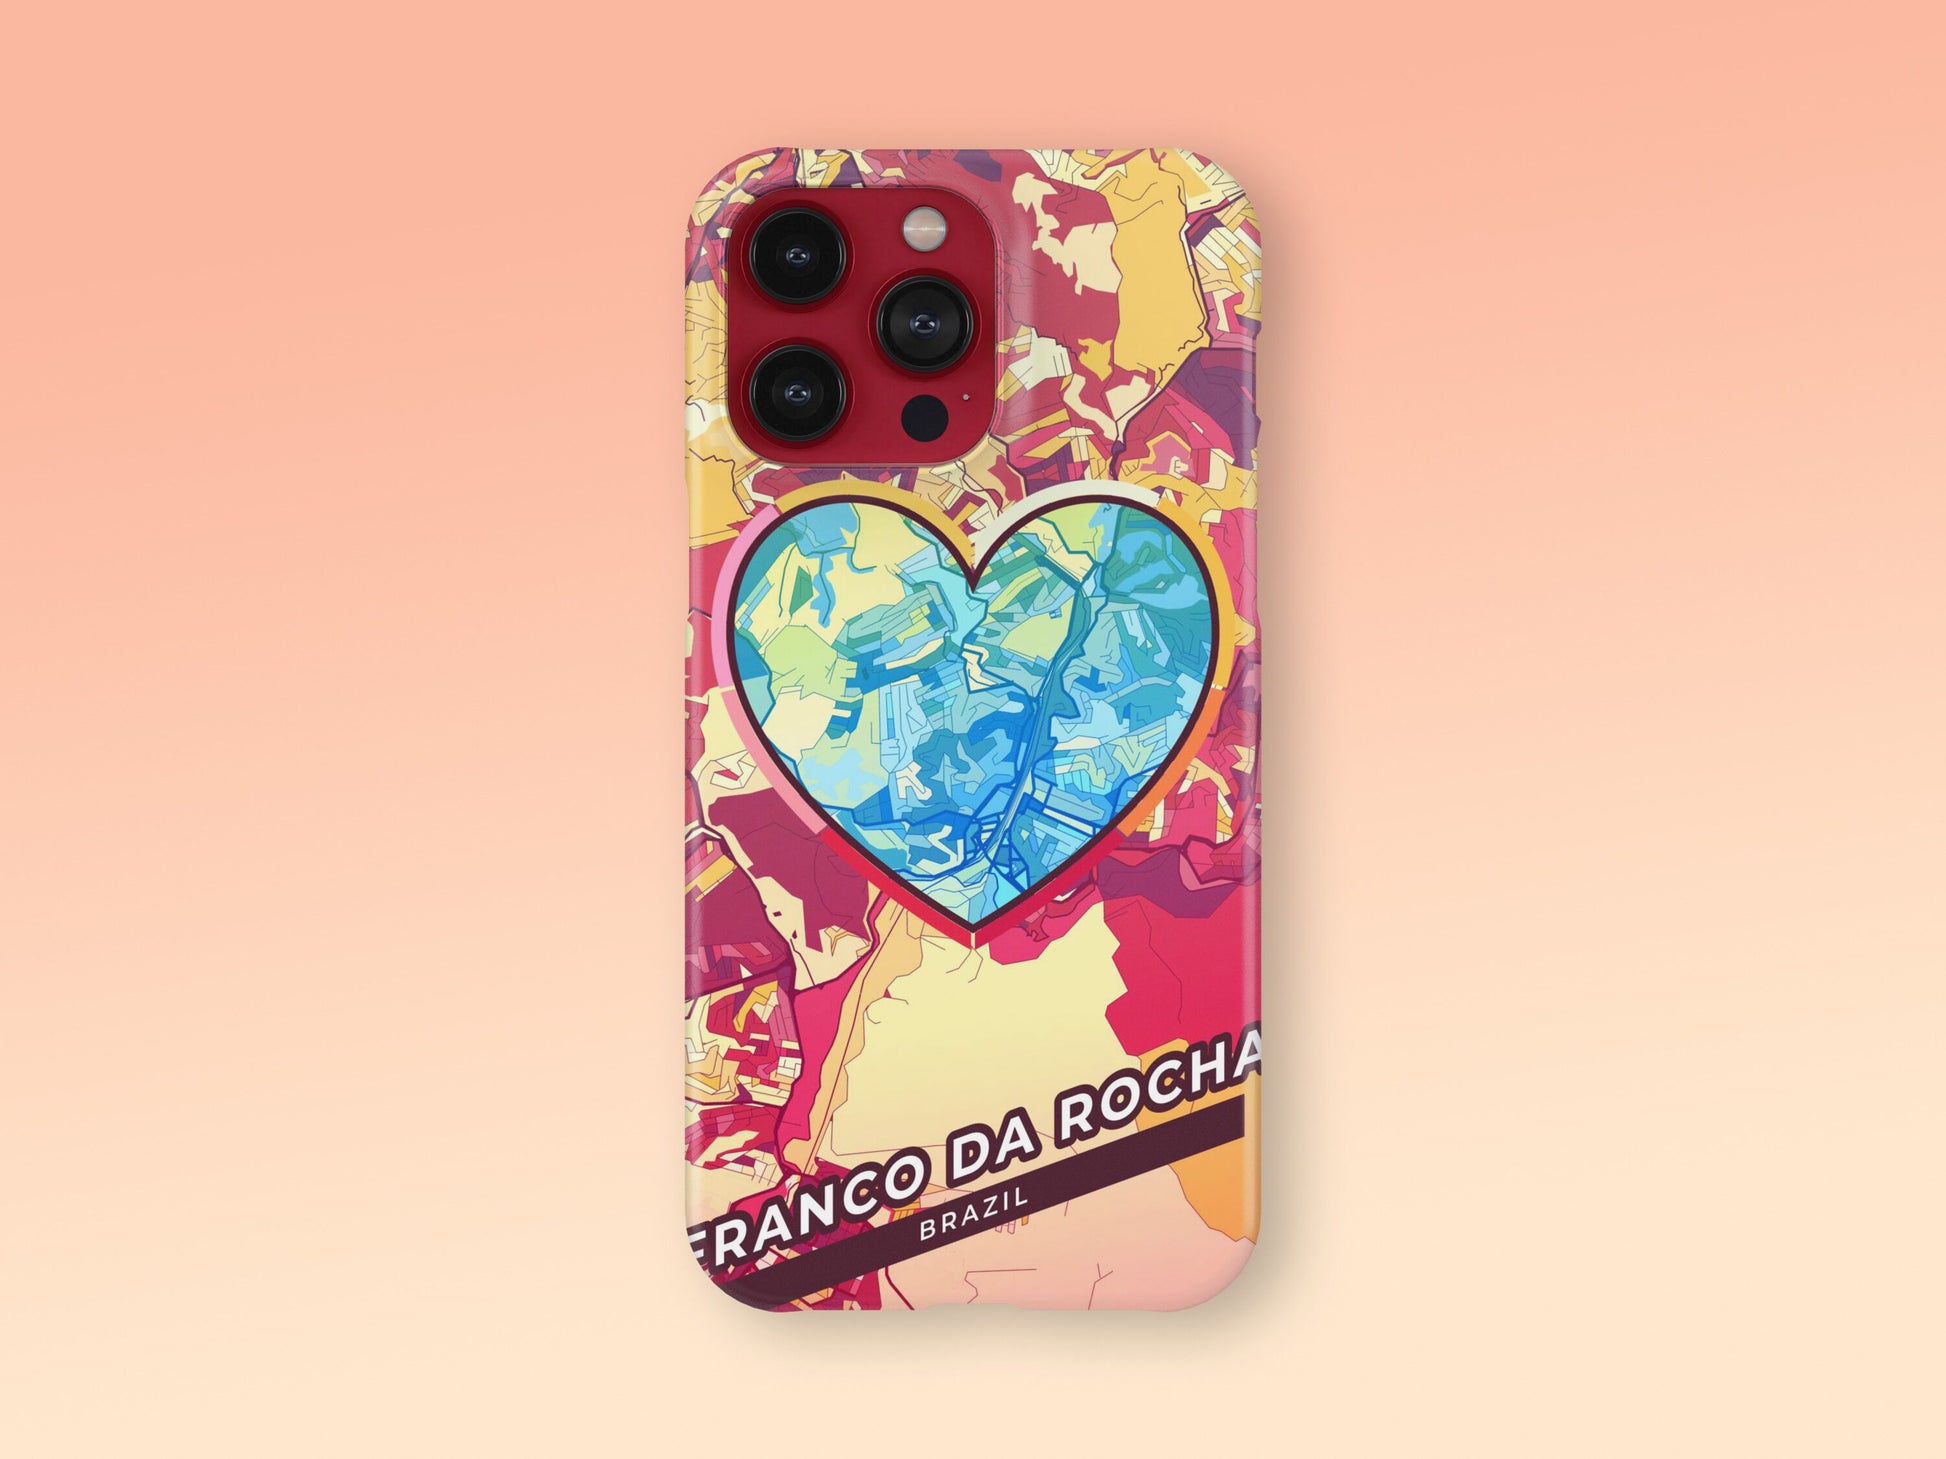 Franco Da Rocha Brazil slim phone case with colorful icon. Birthday, wedding or housewarming gift. Couple match cases. 2